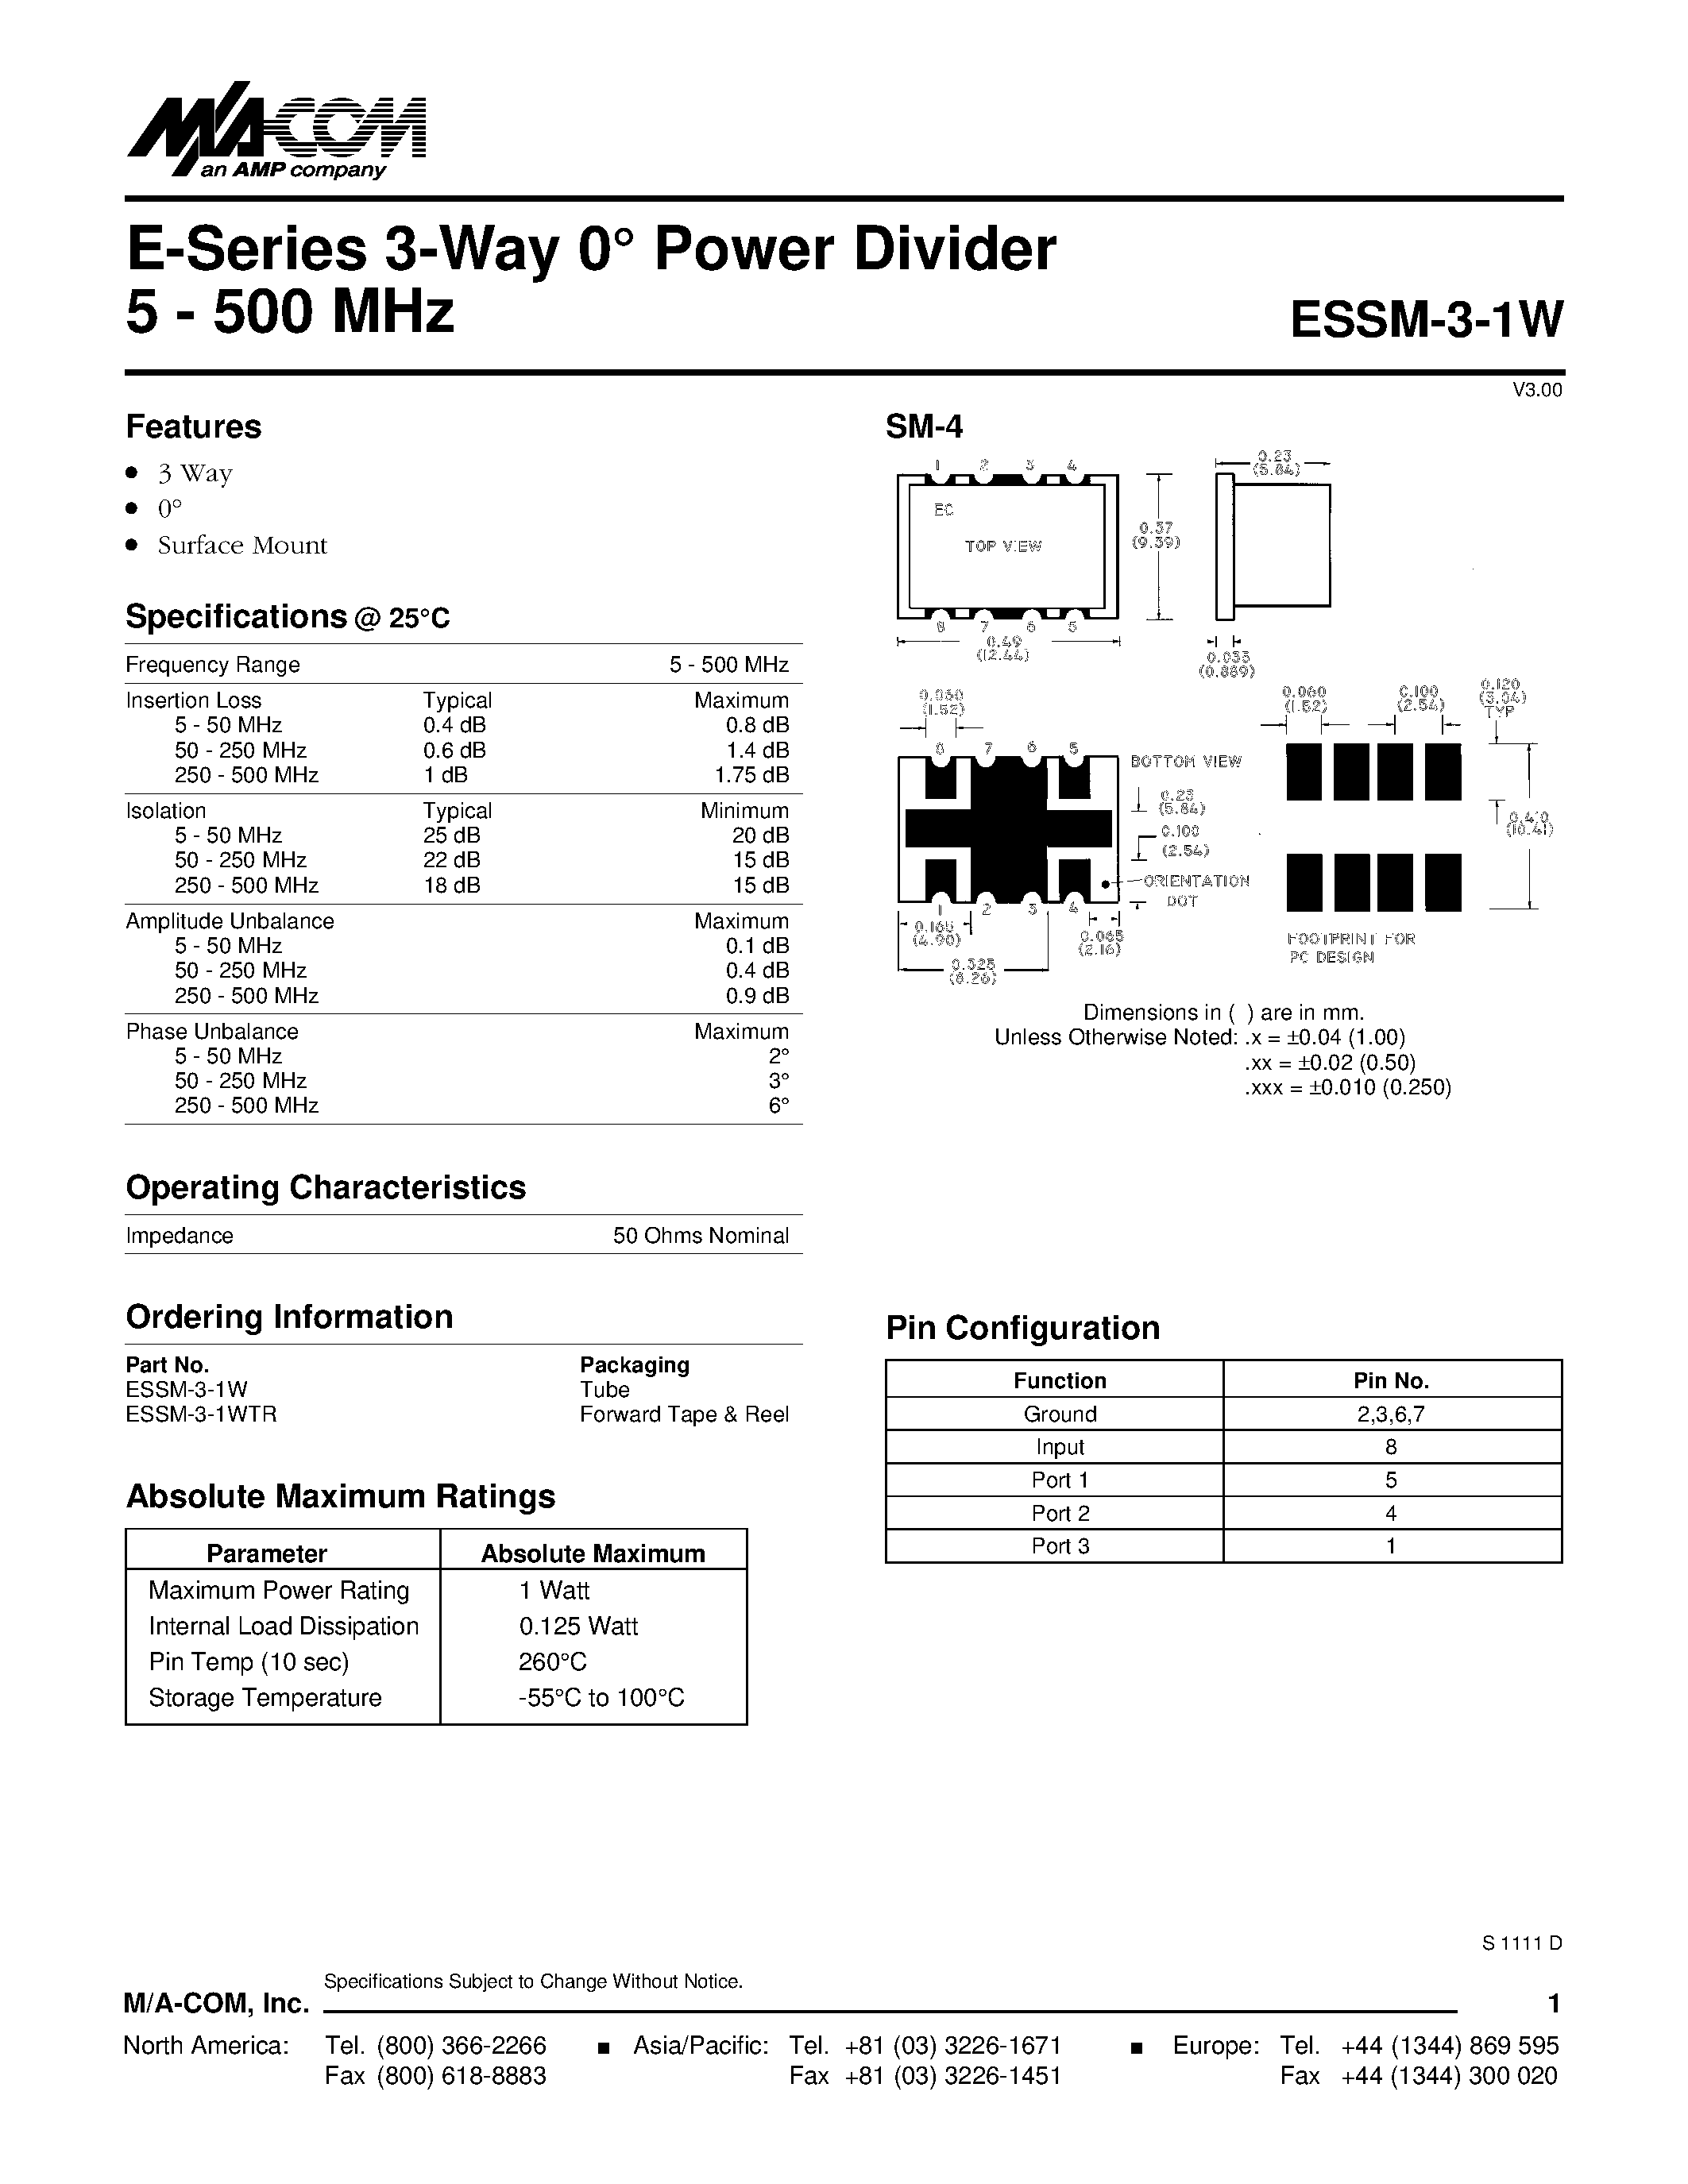 Даташит ESSM-3-1WTR - E-Series 3-Way 0 Power Divider 5 - 500 MHz страница 1